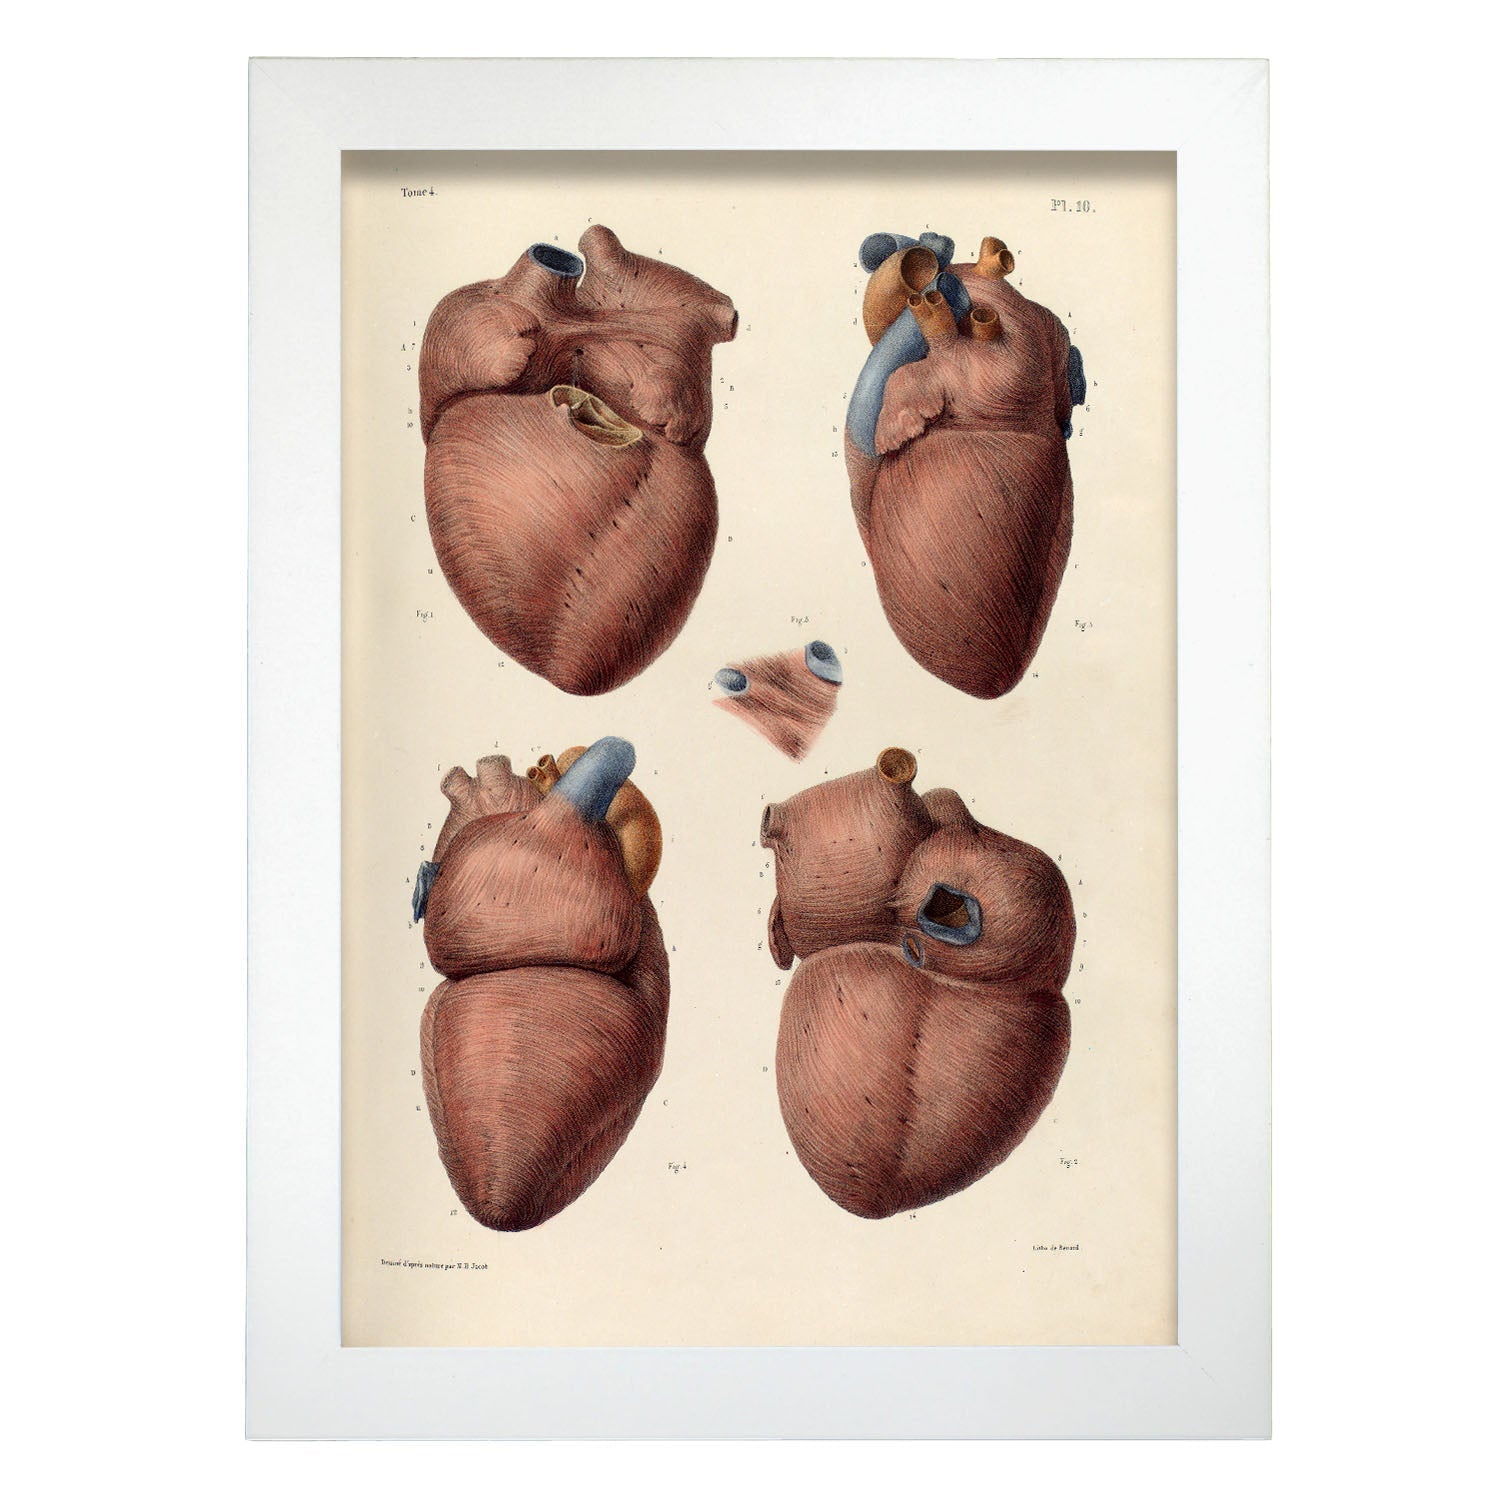 Heart, myocardium-Artwork-Nacnic-A4-Marco Blanco-Nacnic Estudio SL